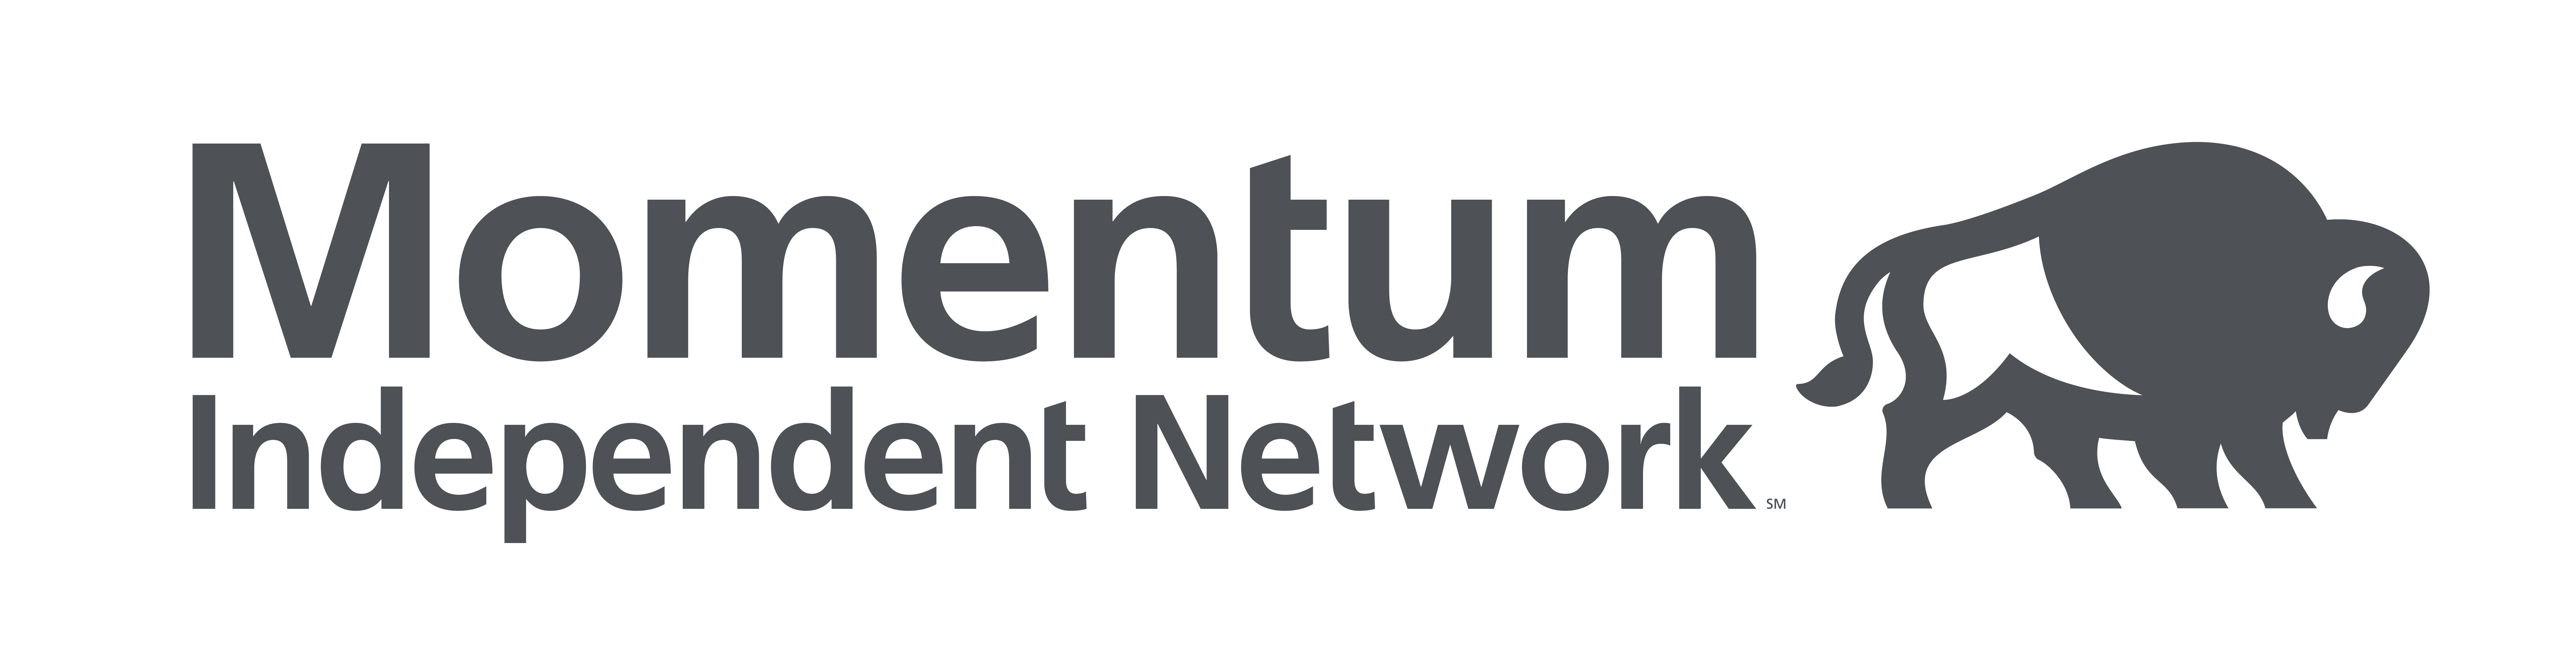 Momentum Independent Network Inc. logo